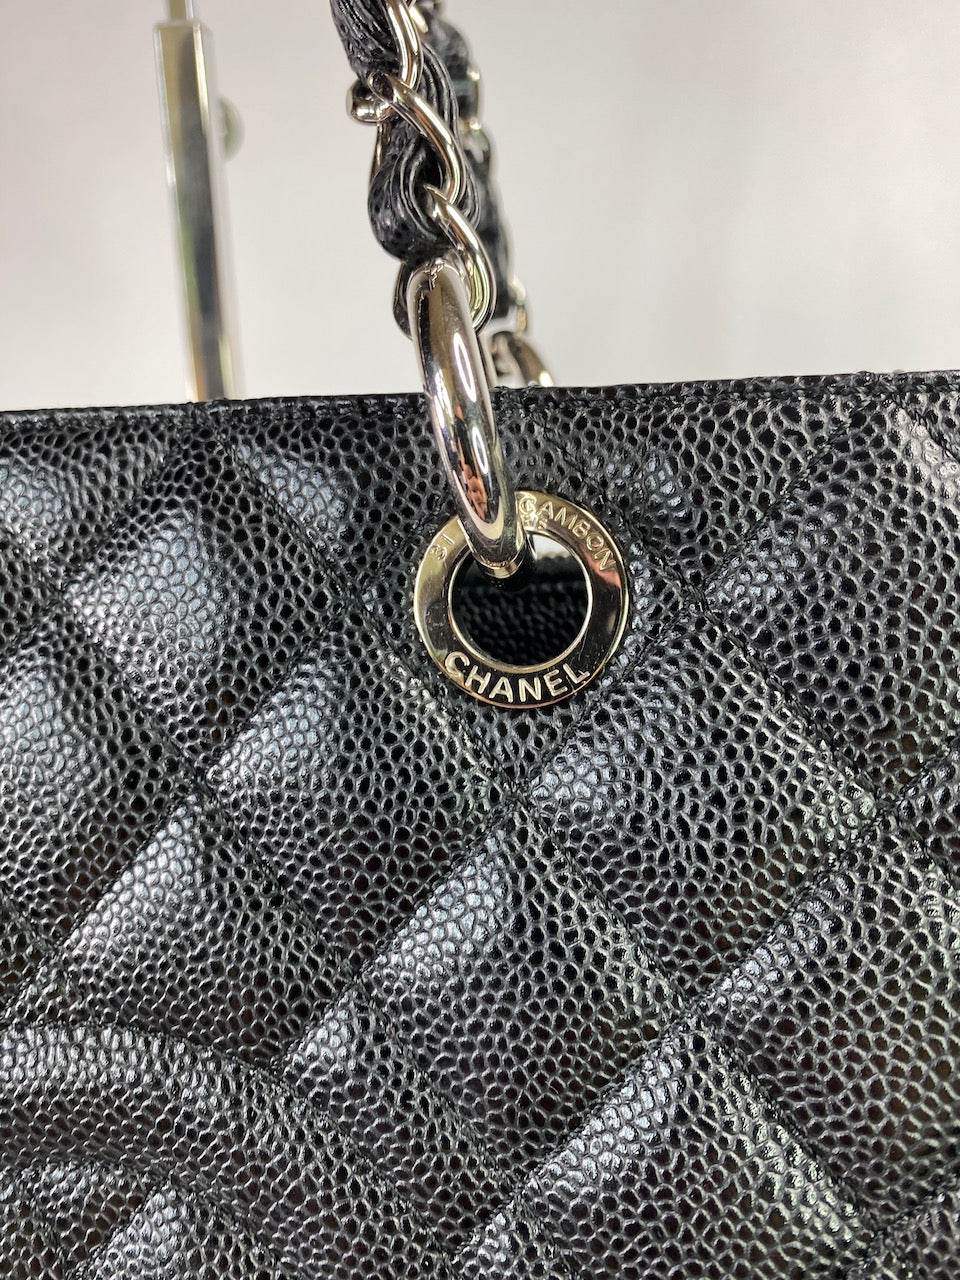 Chanel Grand Shopper Tote - As Seen on Instagram Live 12/07/20 - Siopaella Designer Exchange